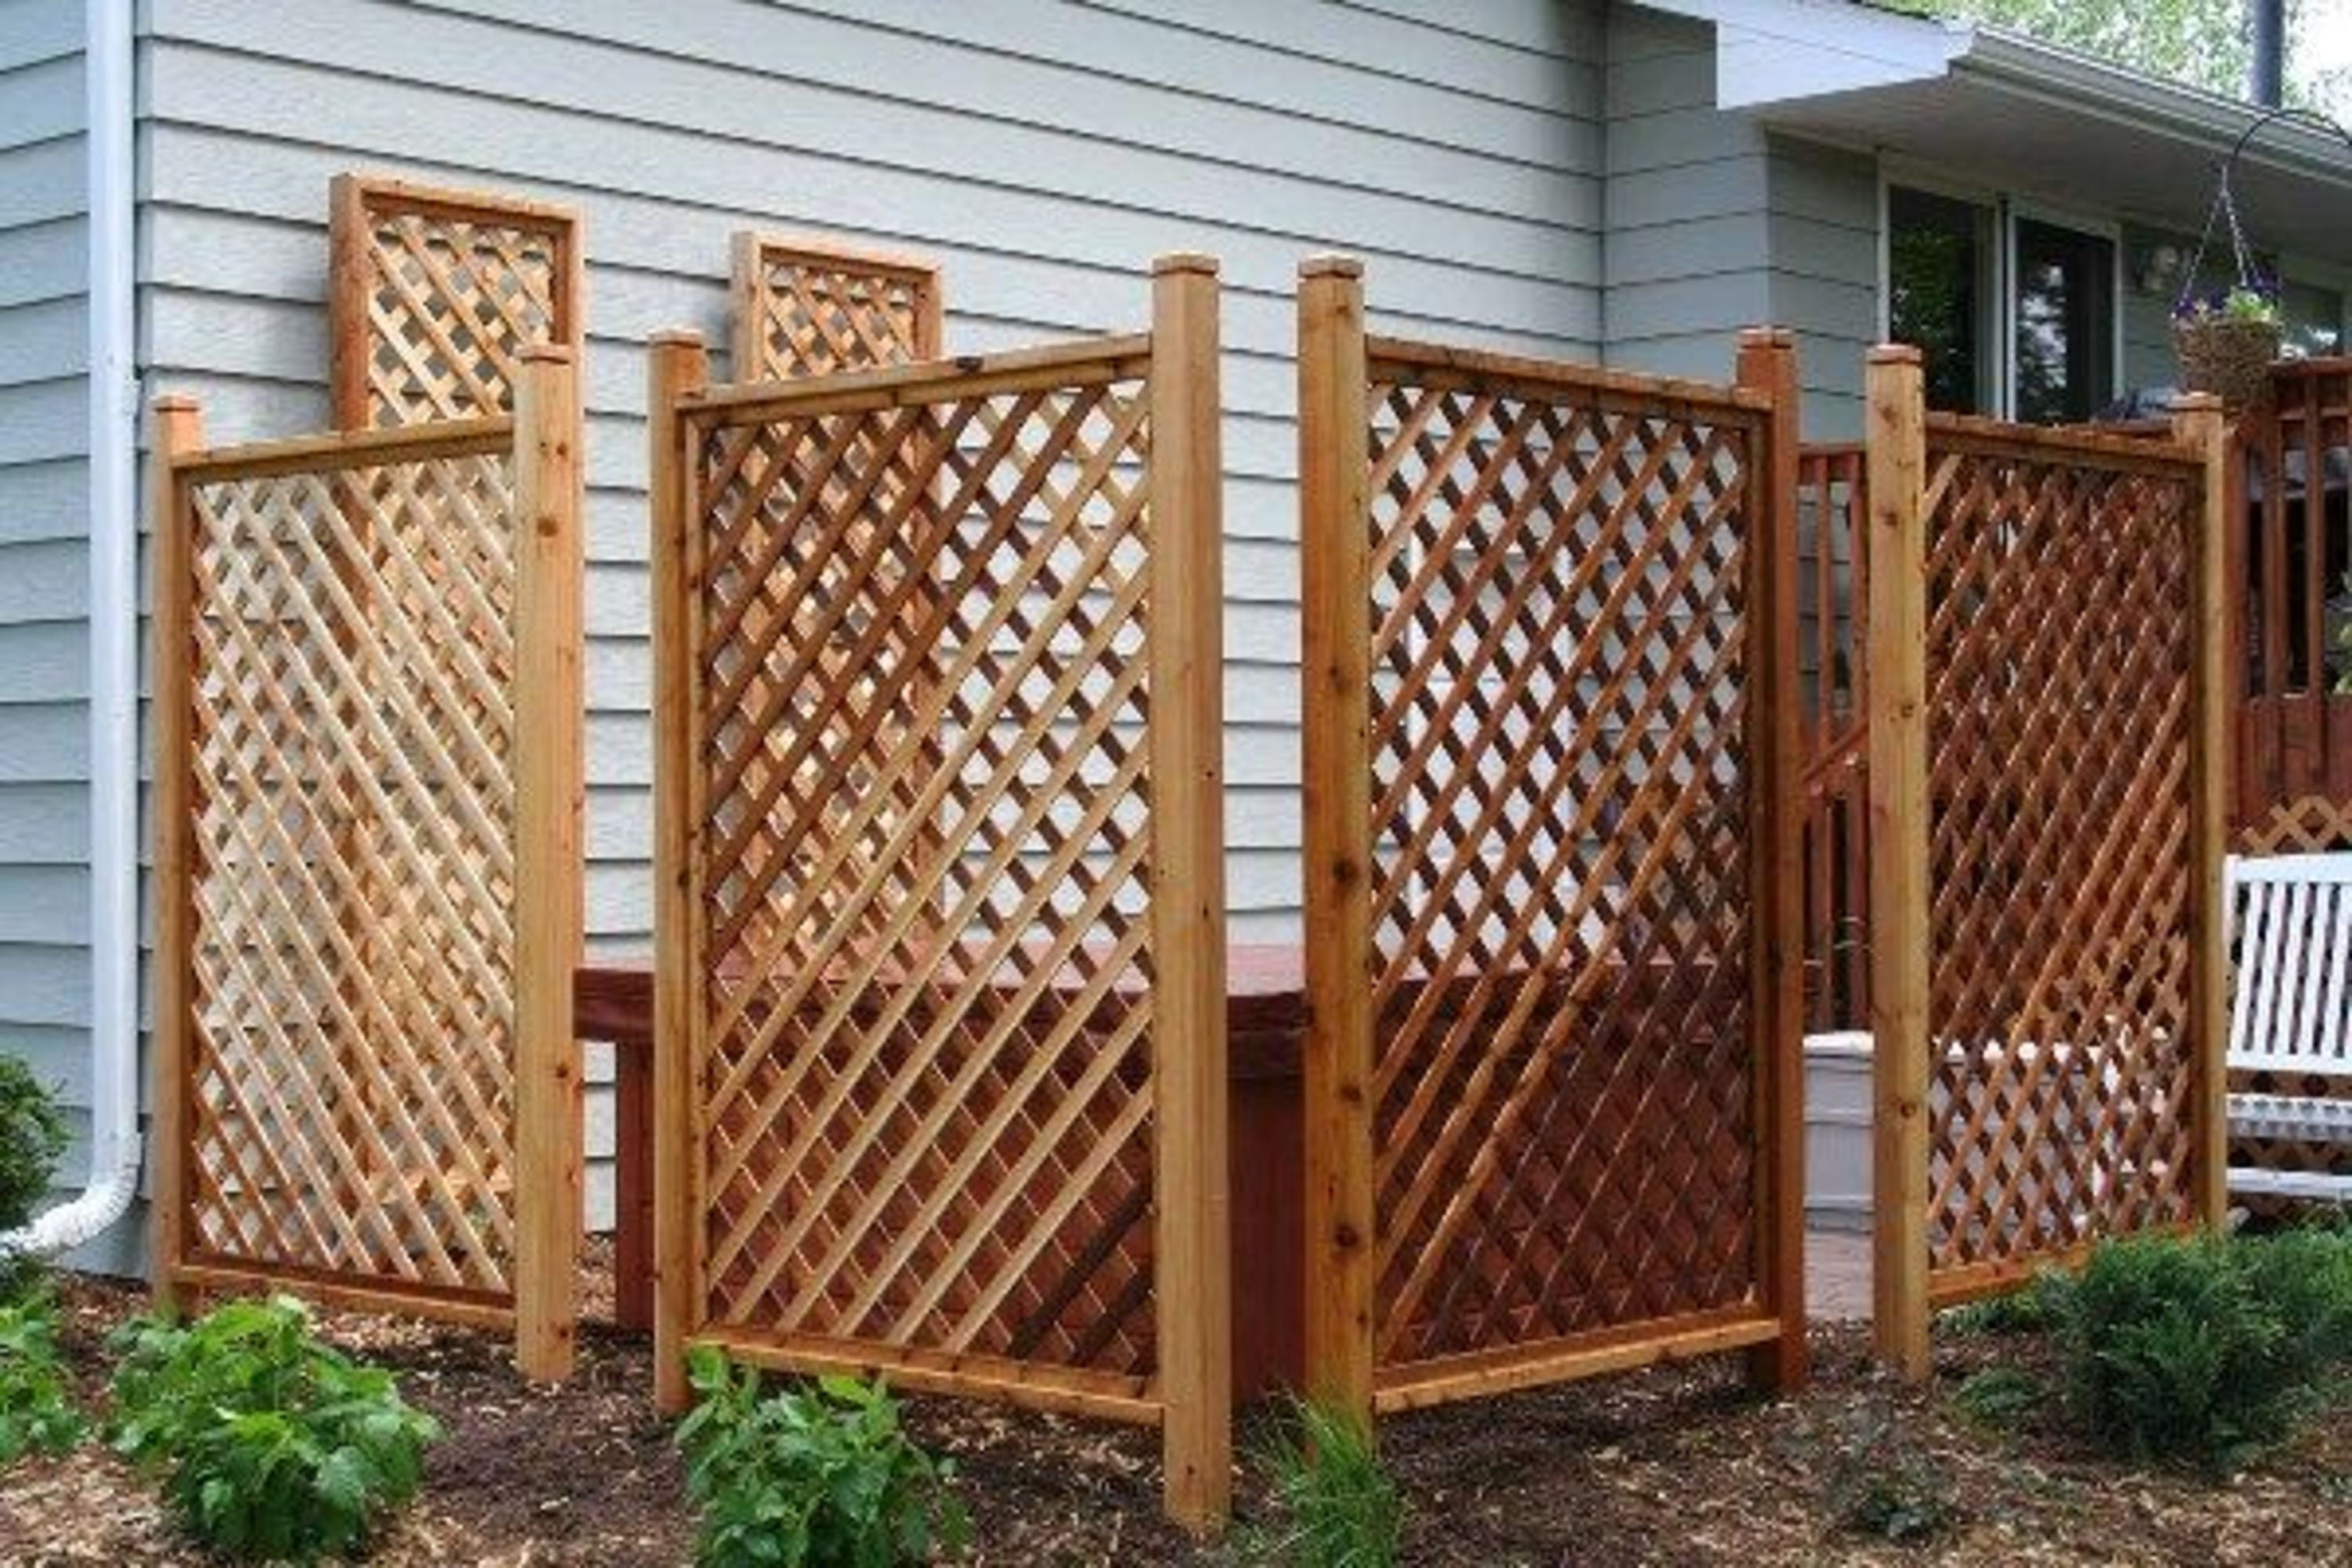 Expanding Trellis Wood Fence Garden Screen Growing Support Divider Freestanding 